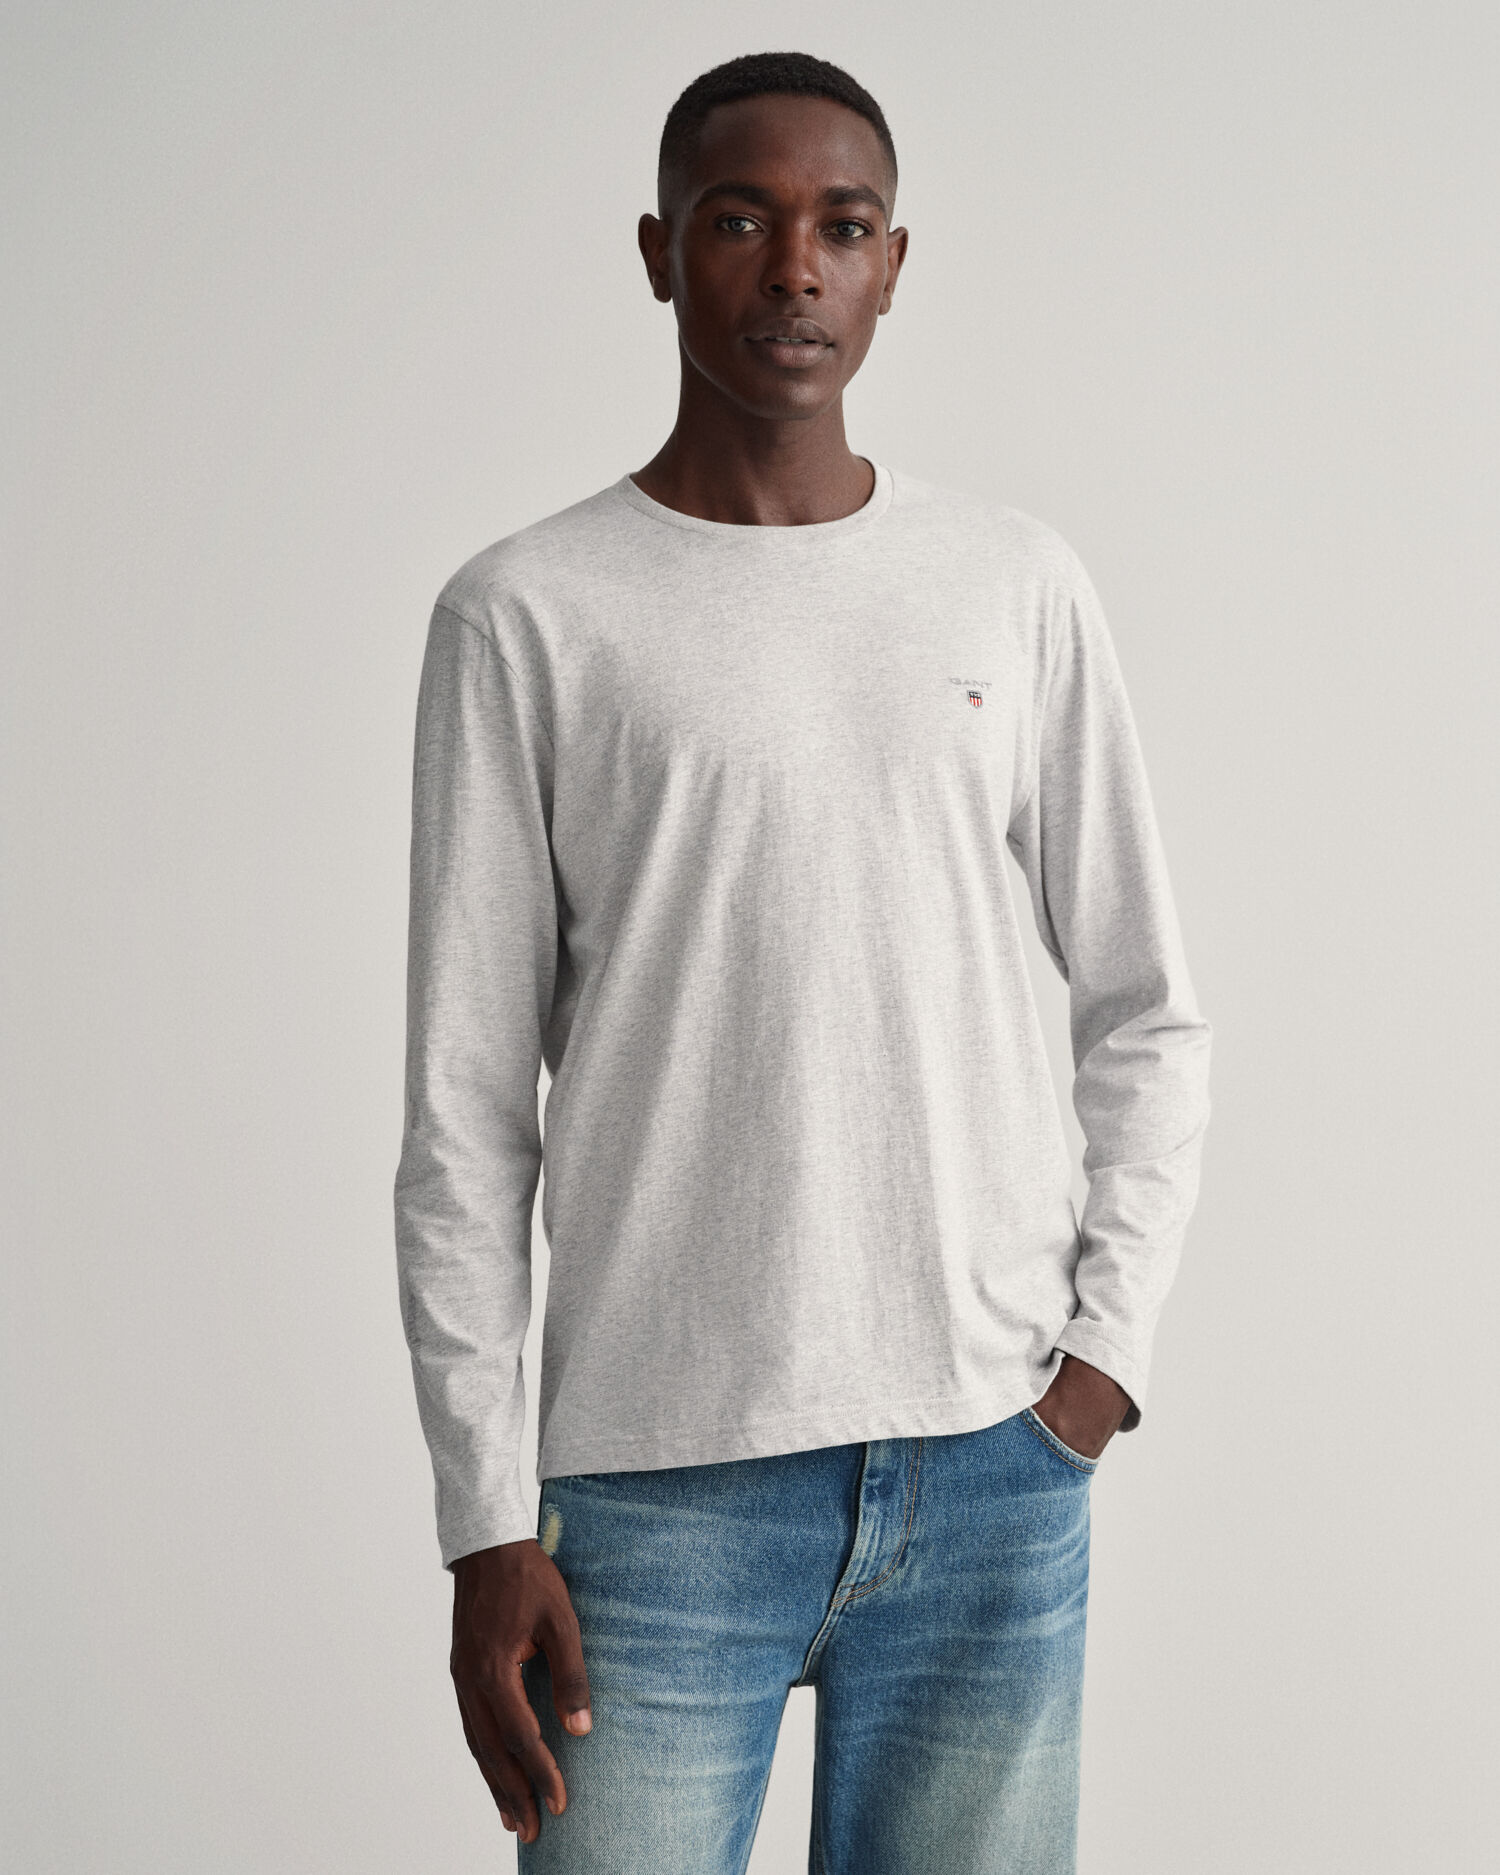 MEN FASHION Jumpers & Sweatshirts Print NoName jumper Gray XL discount 94% 